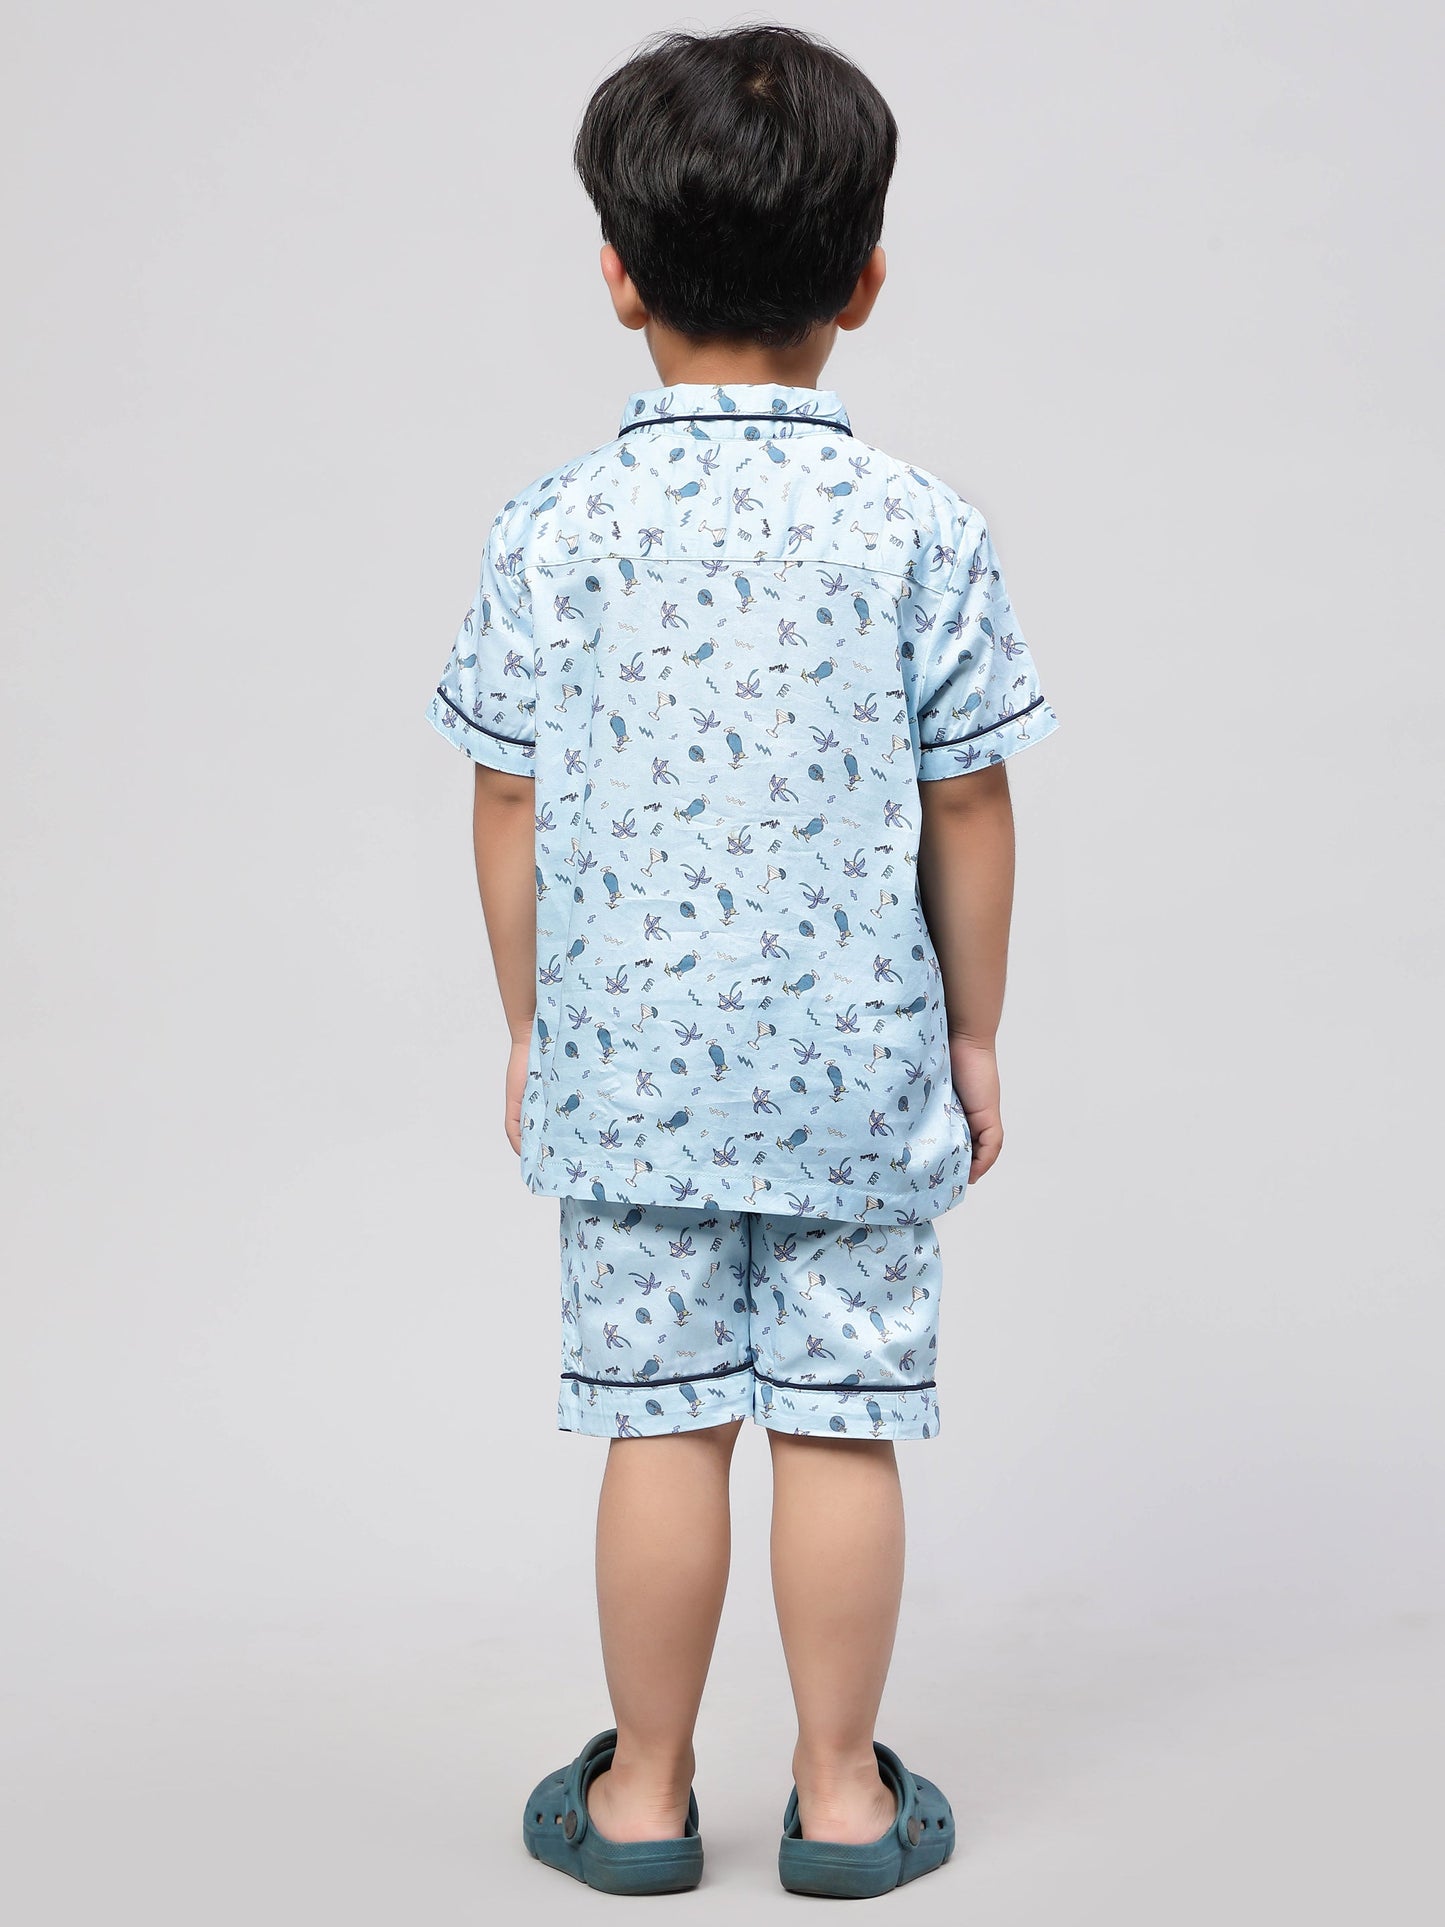 Unisex Beach Print Night suit for Girls or Boys